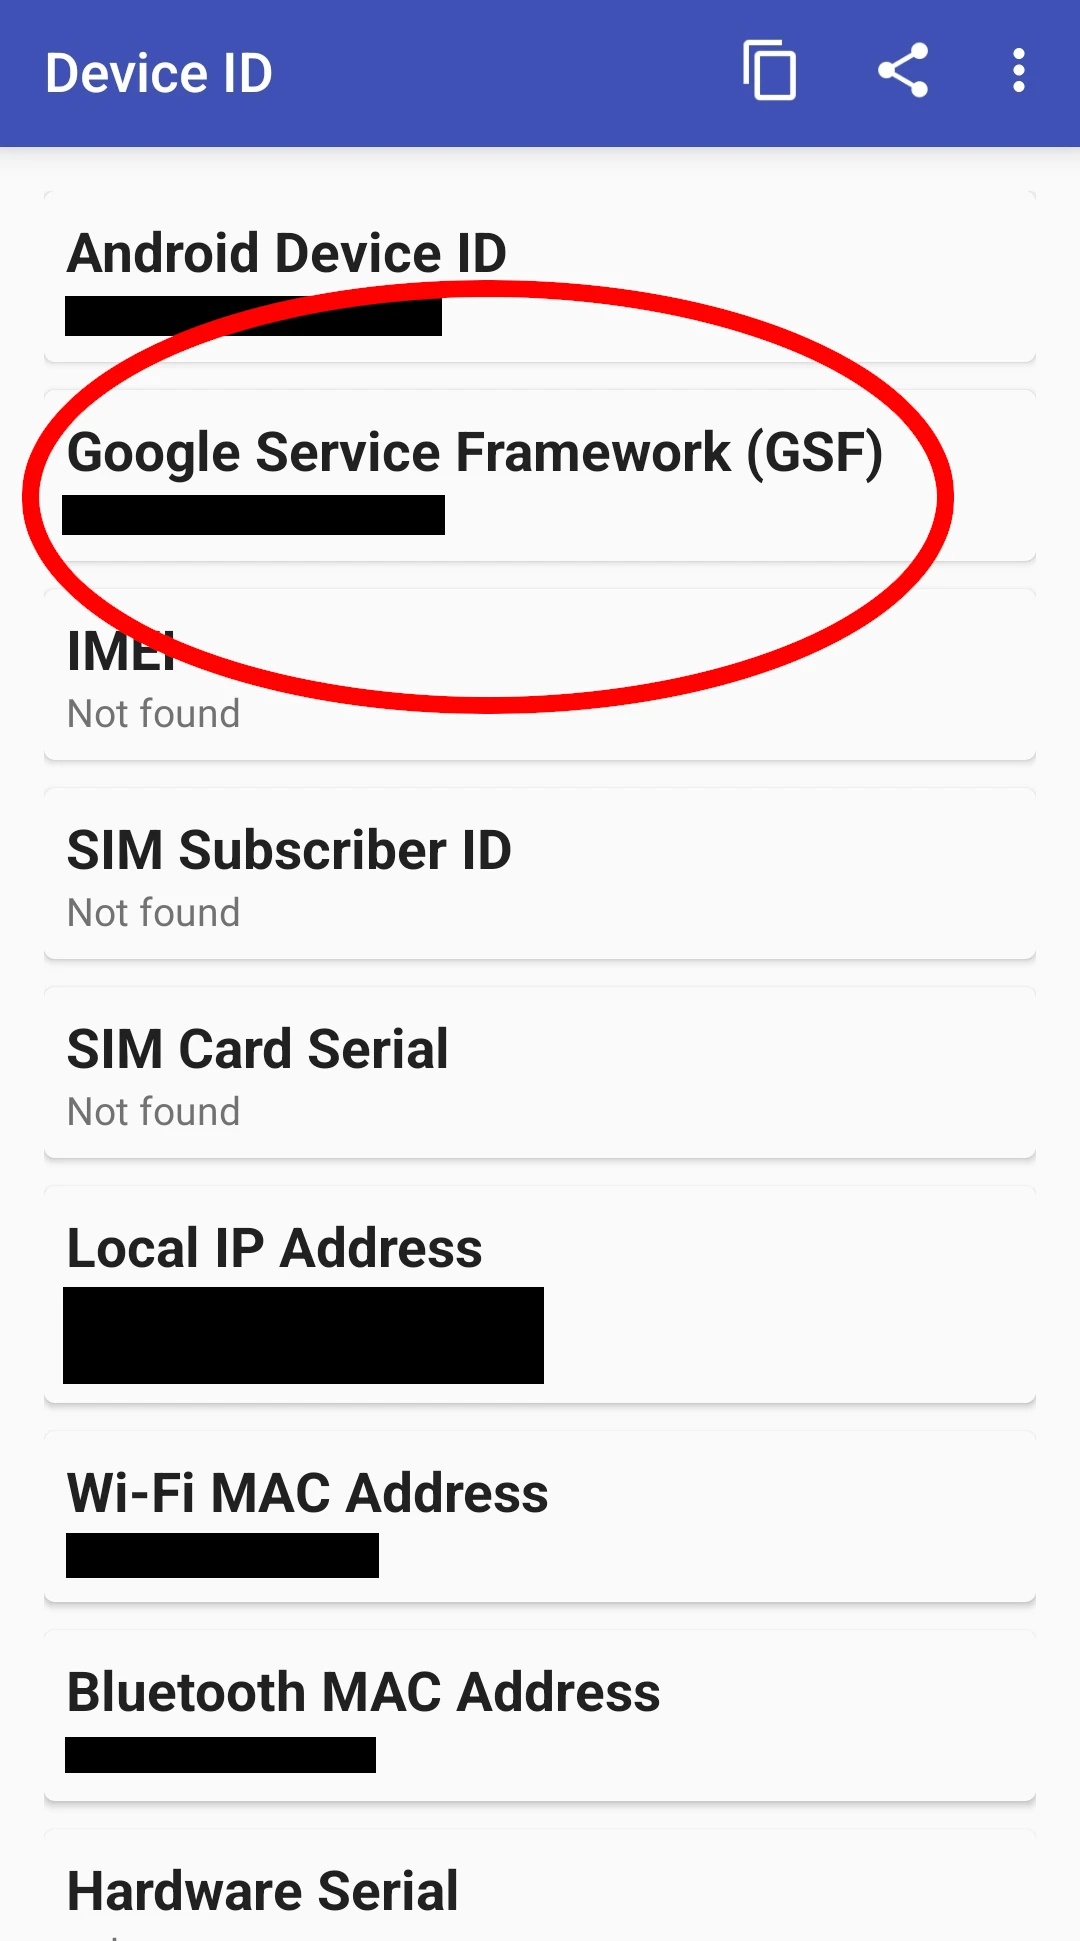 Google Service Framework (GSF) in Device ID